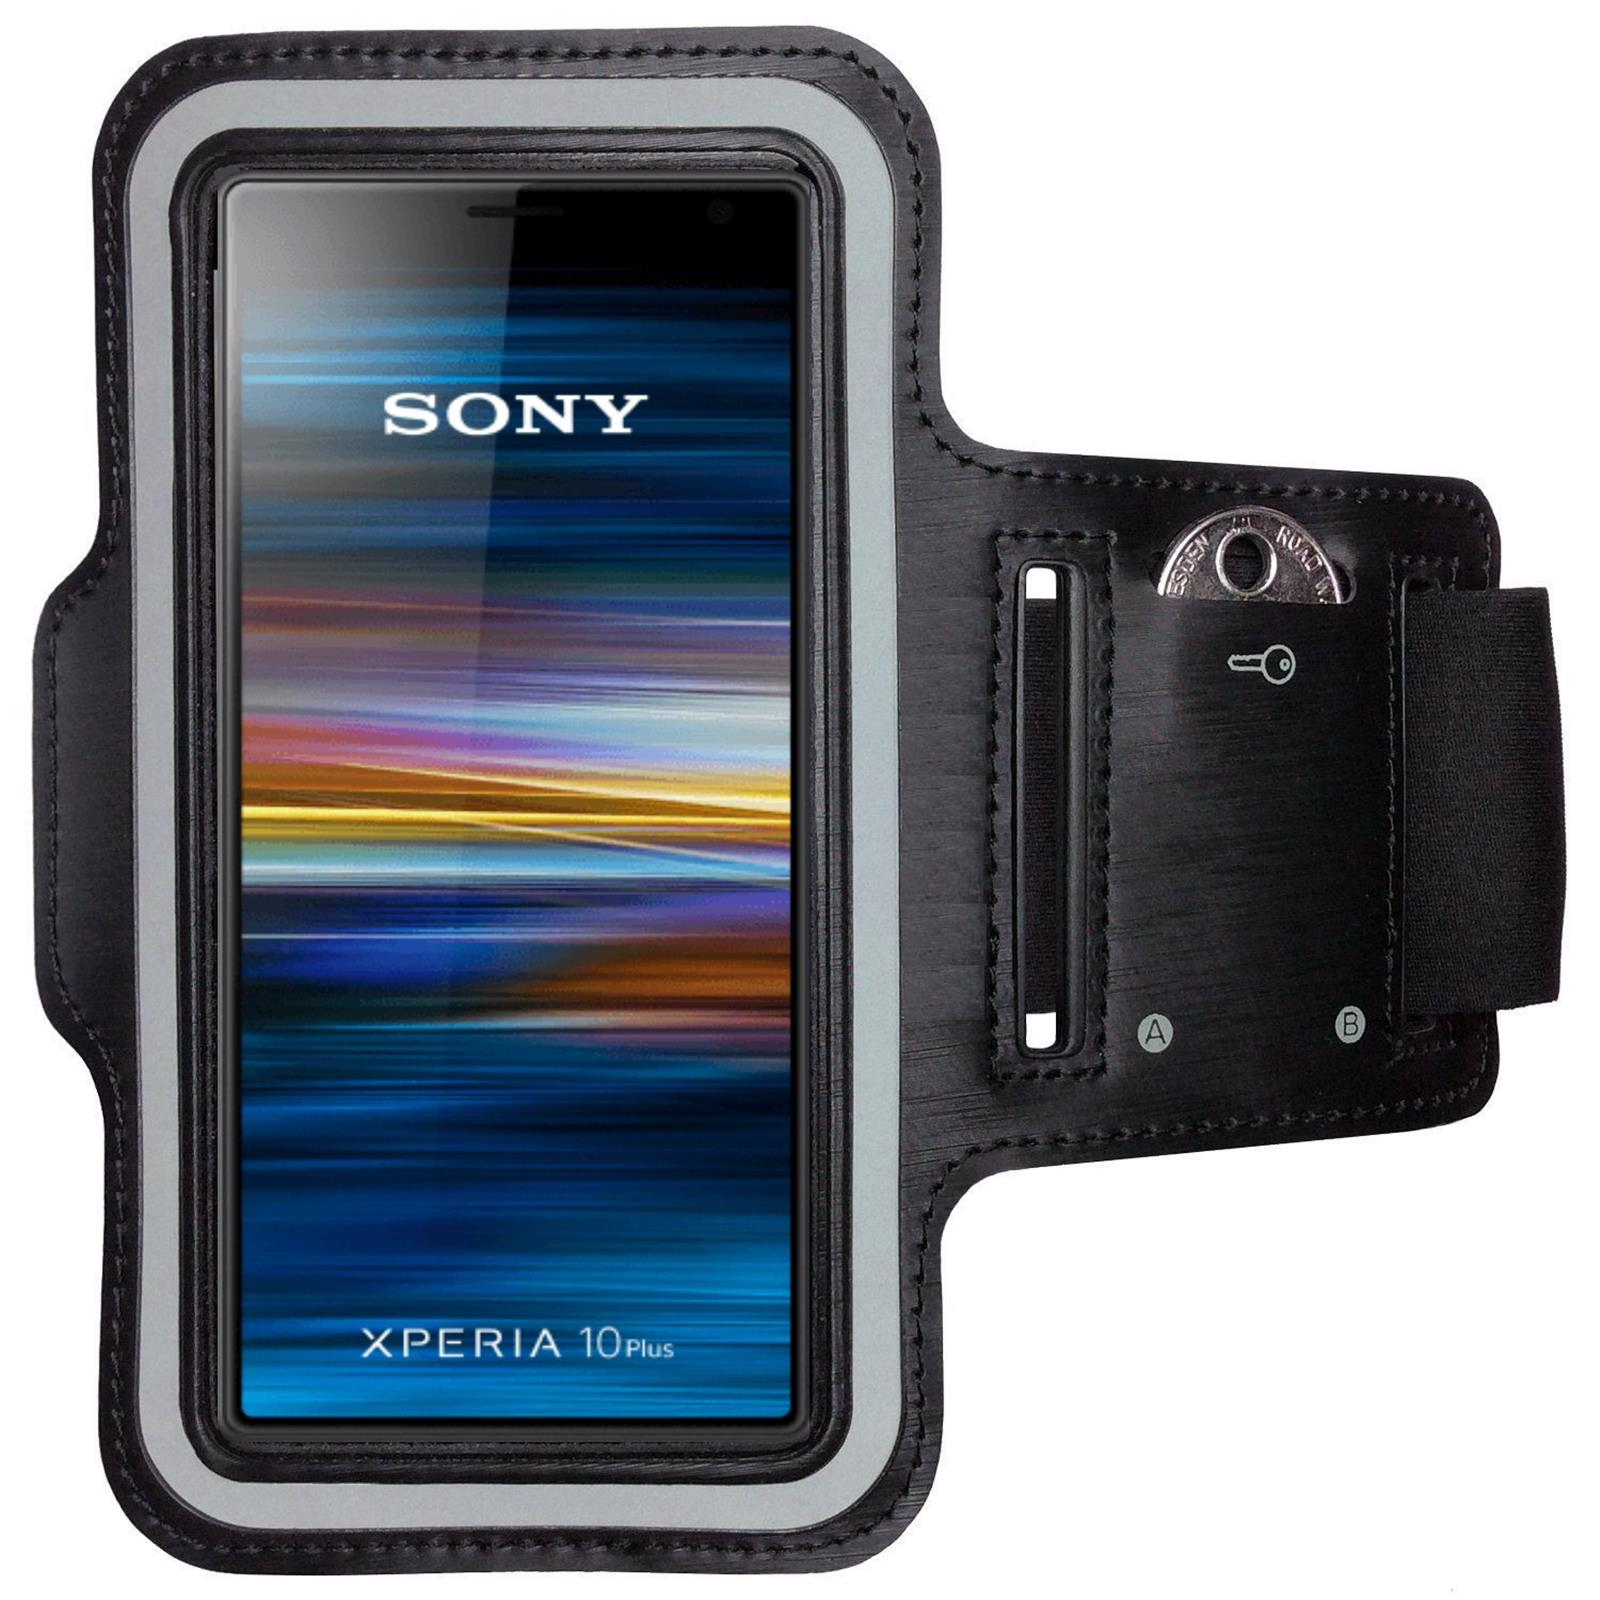 Xperia COVERKINGZ Sony, Schwarz 10 Plus, Sportarmband, Armtasche,